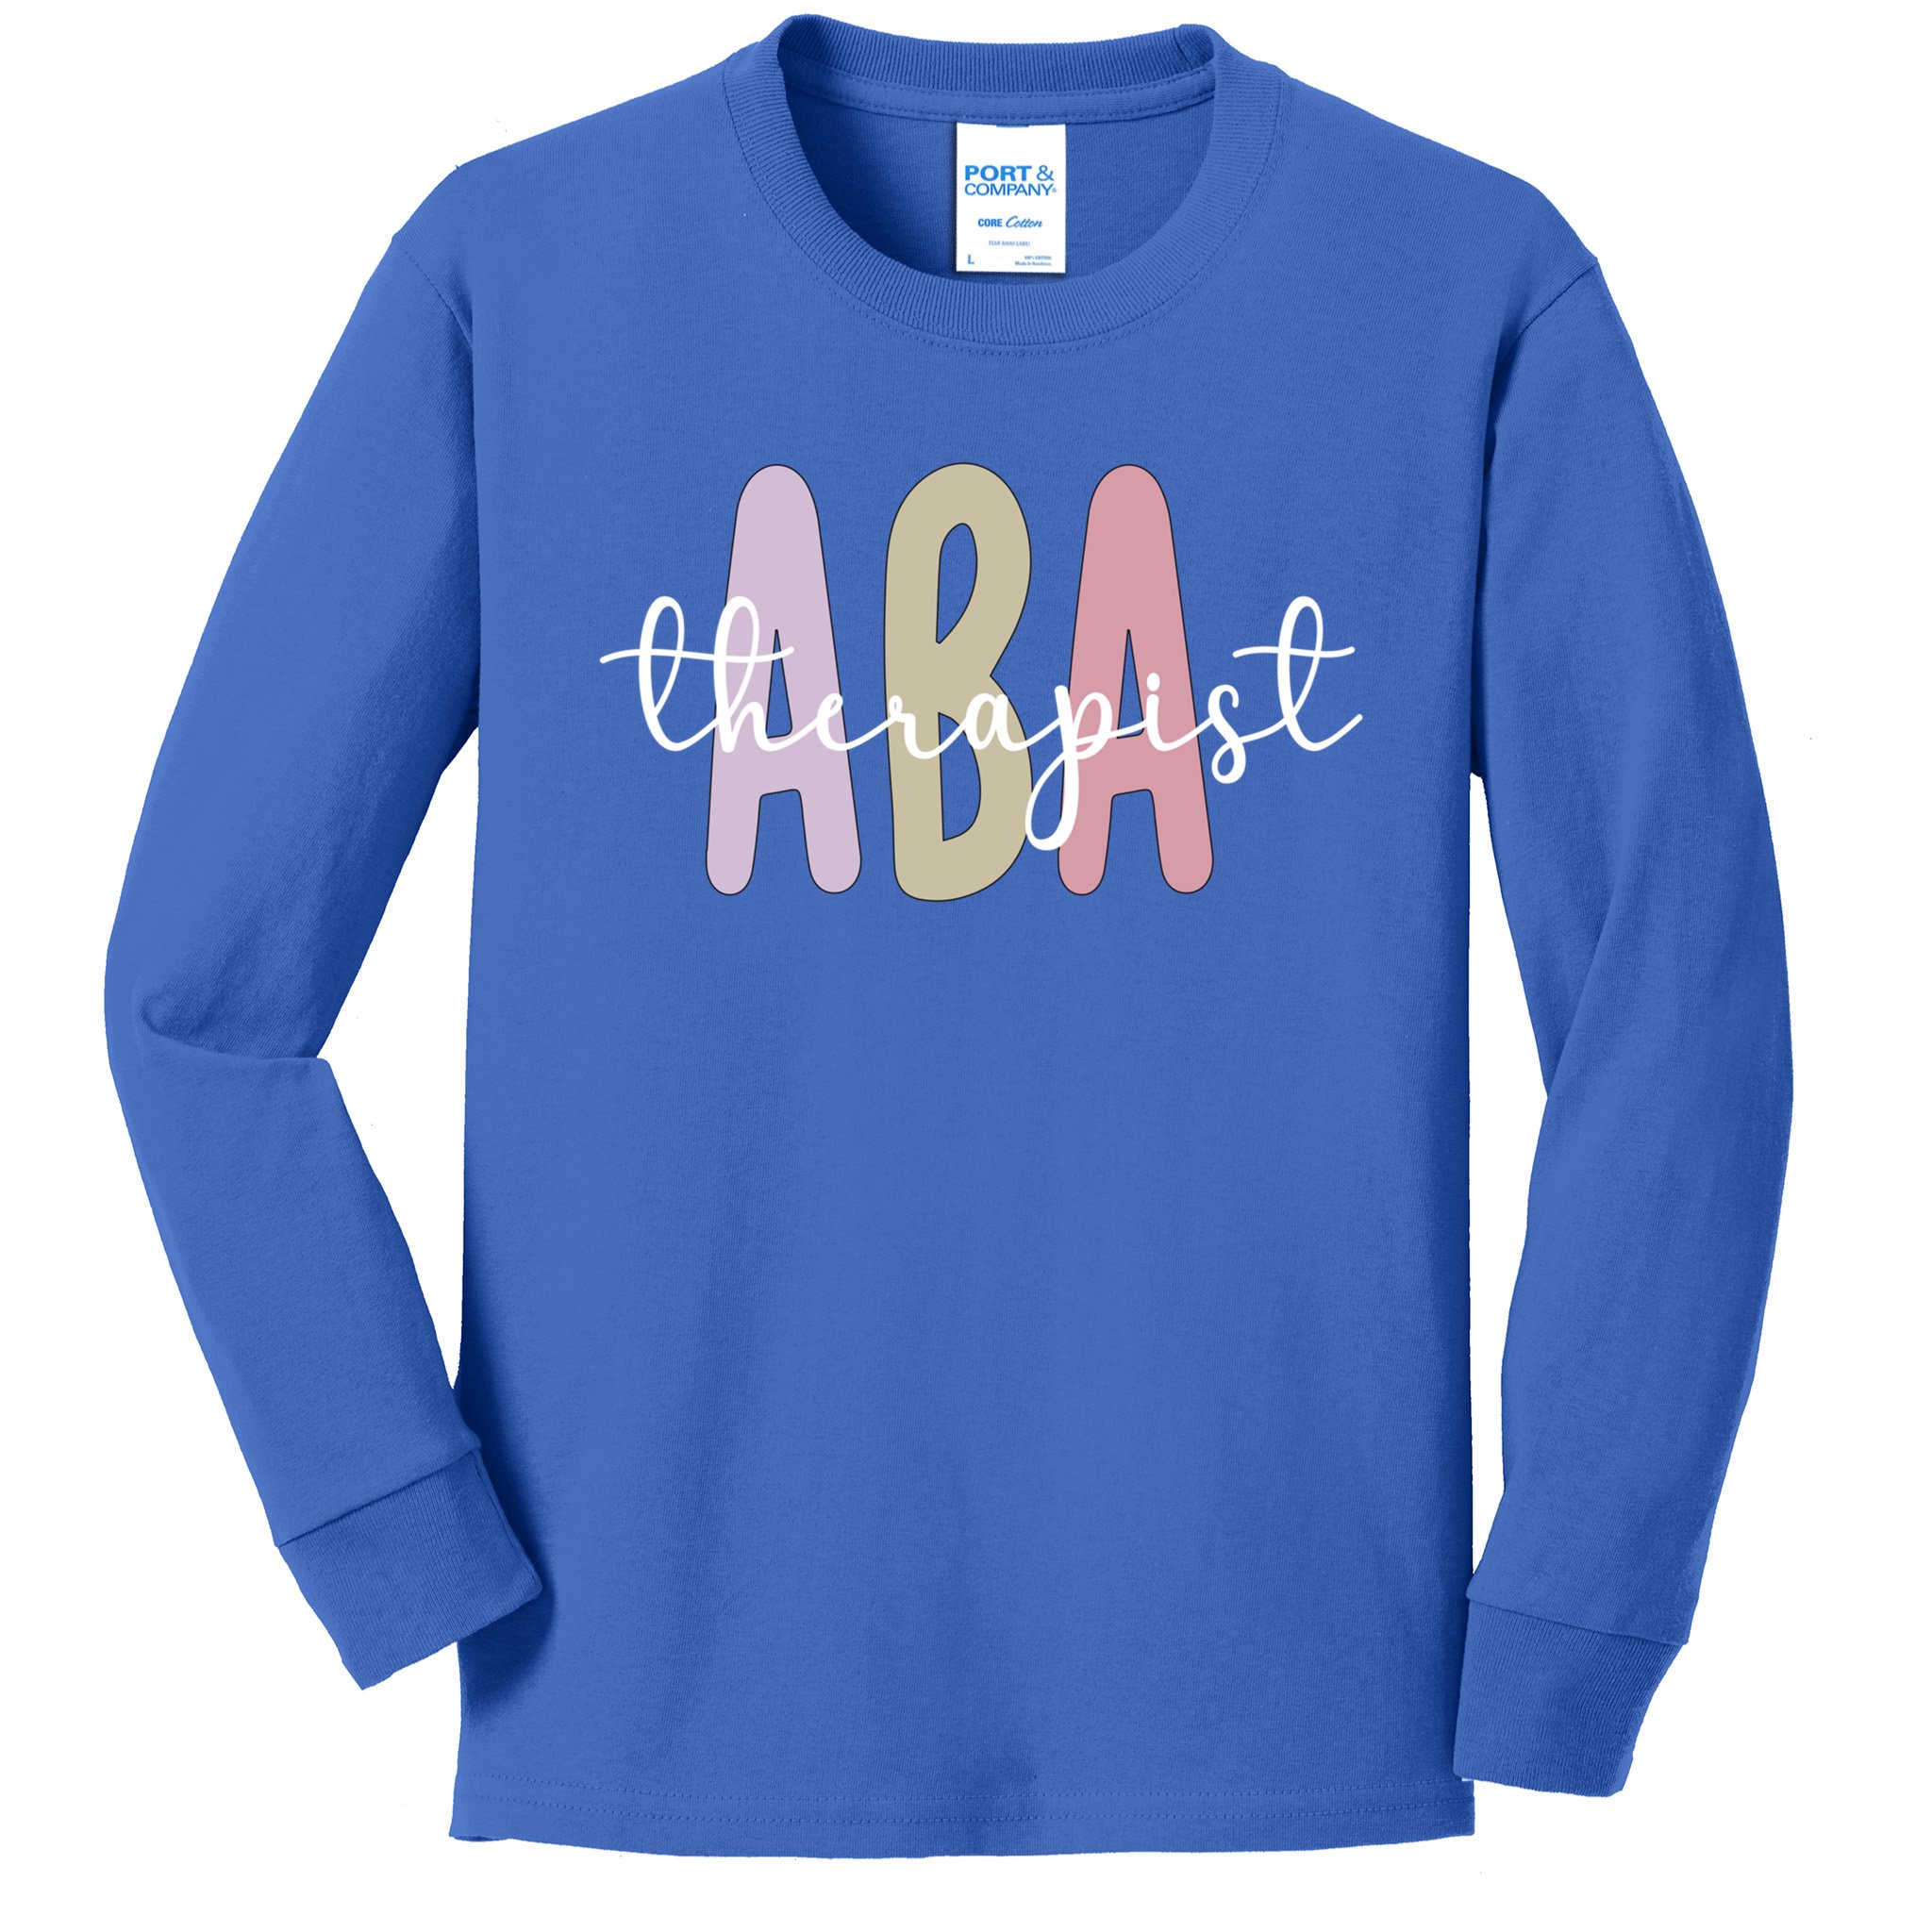 Womens Aba All Day Behavior Analyst Bcba Gifts V-Neck Tee T-Shirt